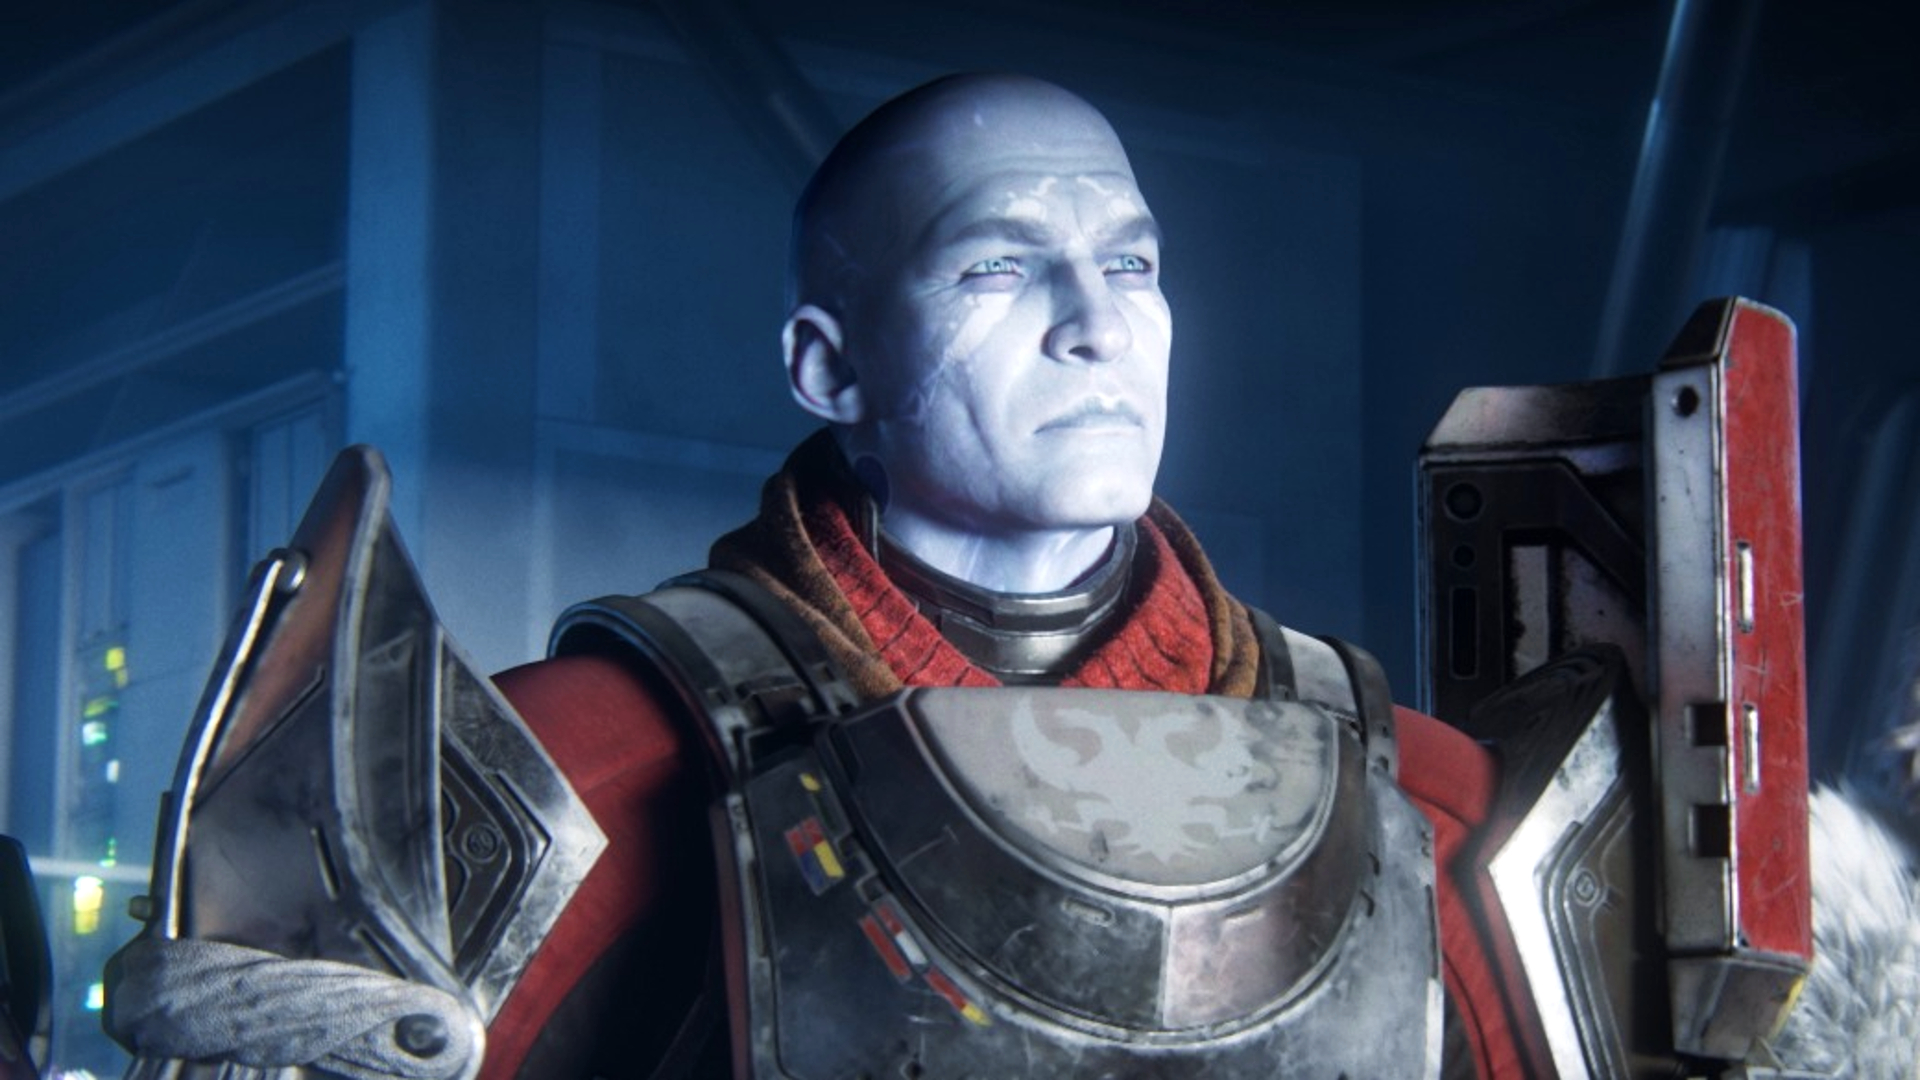 Komandan Zavala, seorang pria dari Destiny 2, berdiri dengan bangga dengan perak dan baju besi merah